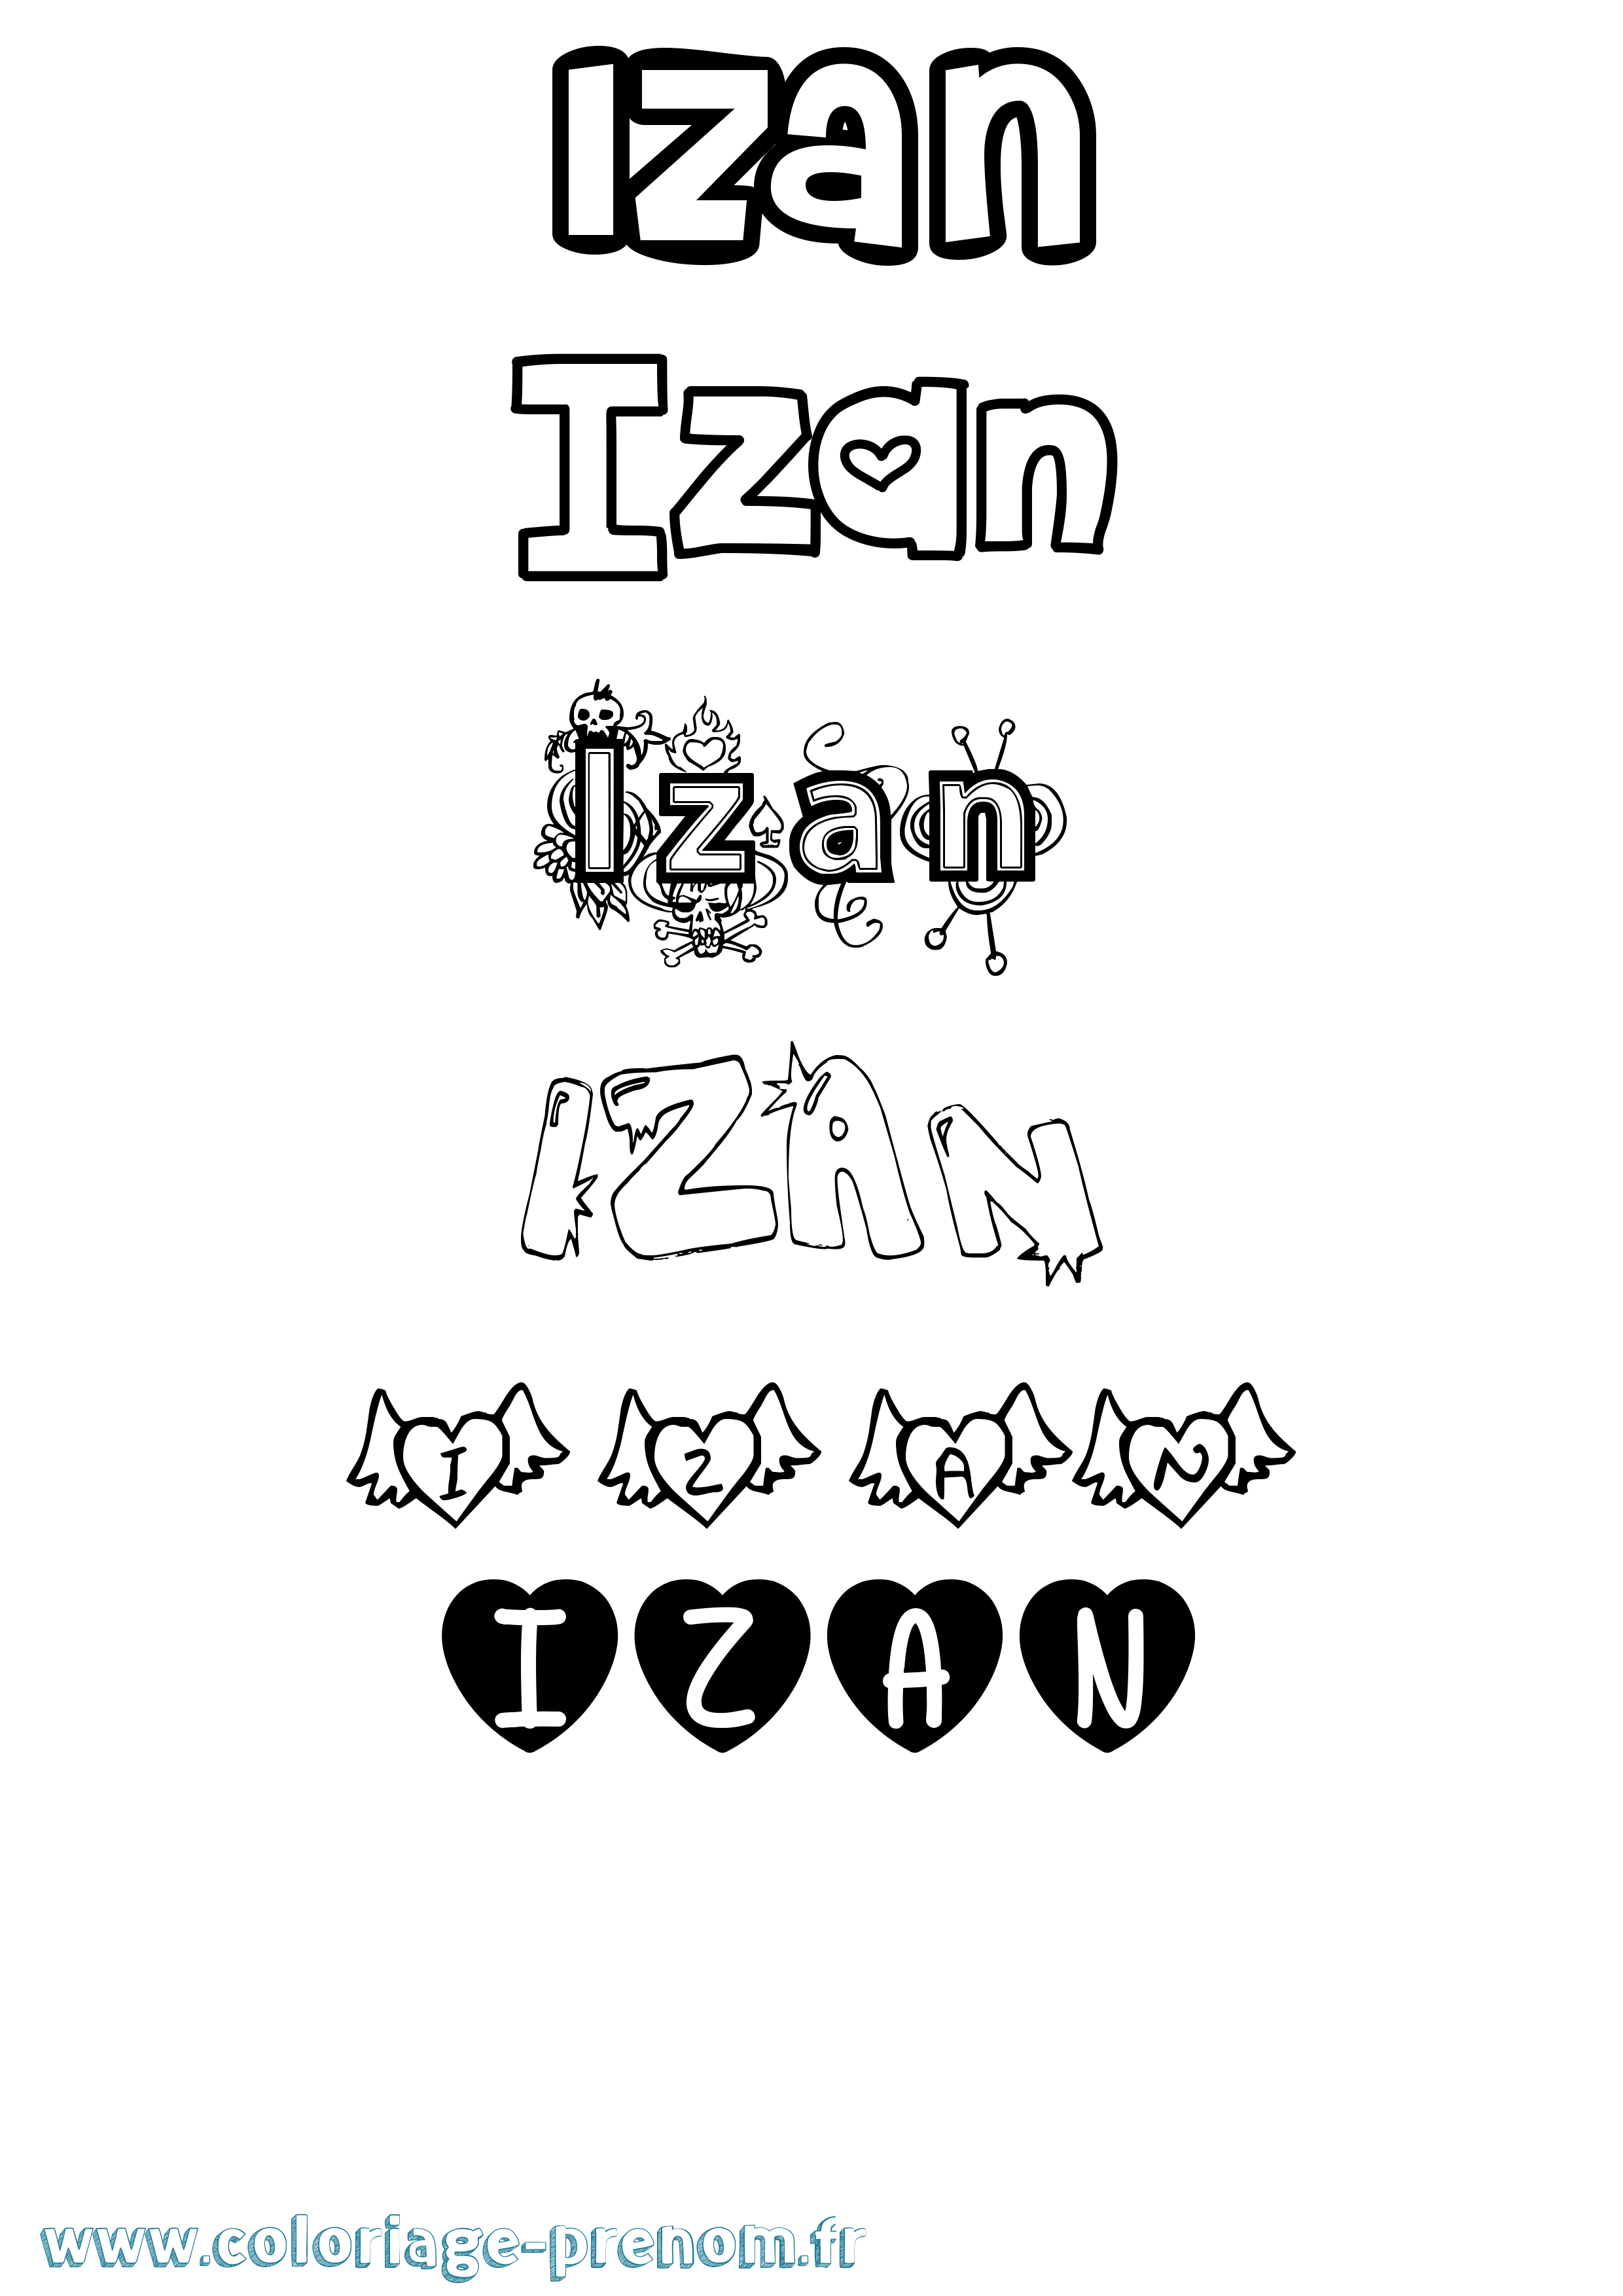 Coloriage prénom Izan Girly